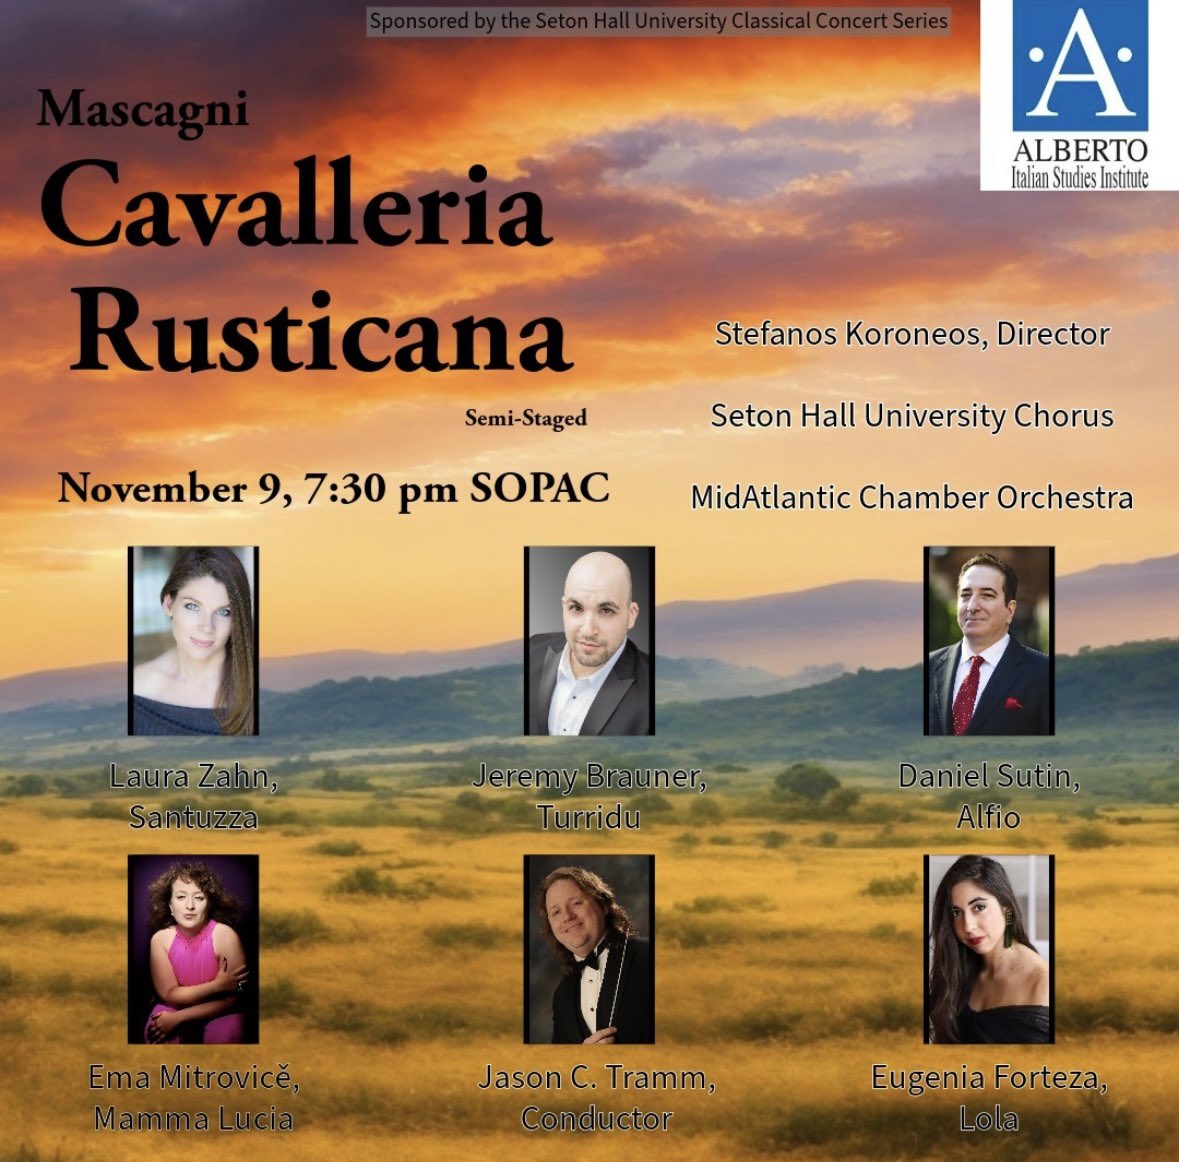 This Thursday at 7:30pm! Seton Hall University Classical Concert Series presents Cavalleria Rusticana by Pietro Mascagni 🎶🎼 #opera #orchestra #southorange #setonhall